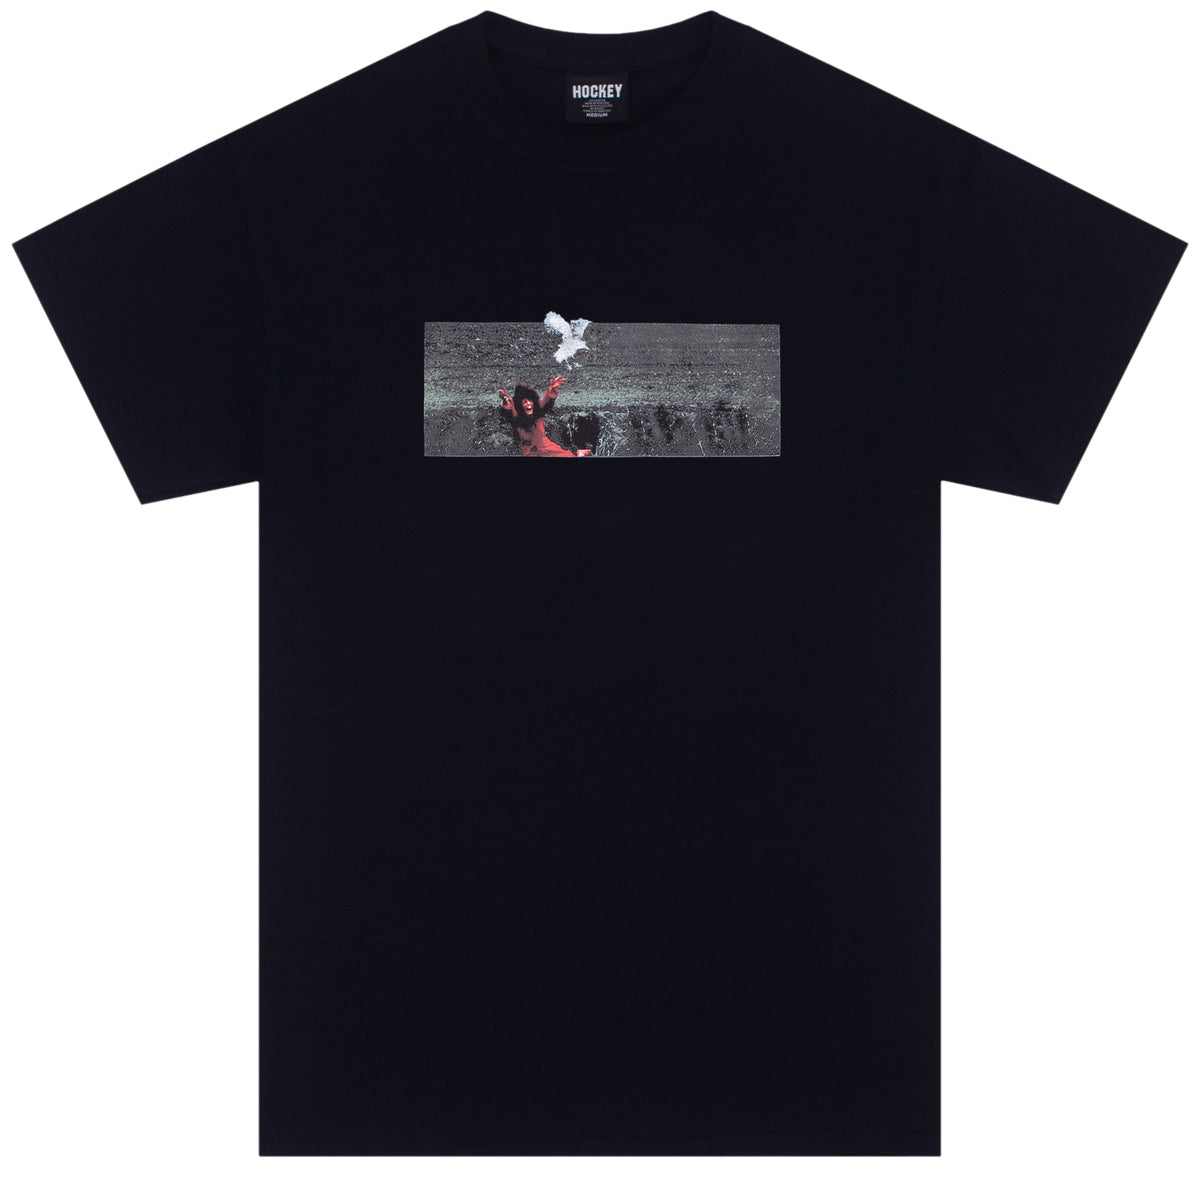 Hockey Prey T-Shirt - Black image 1